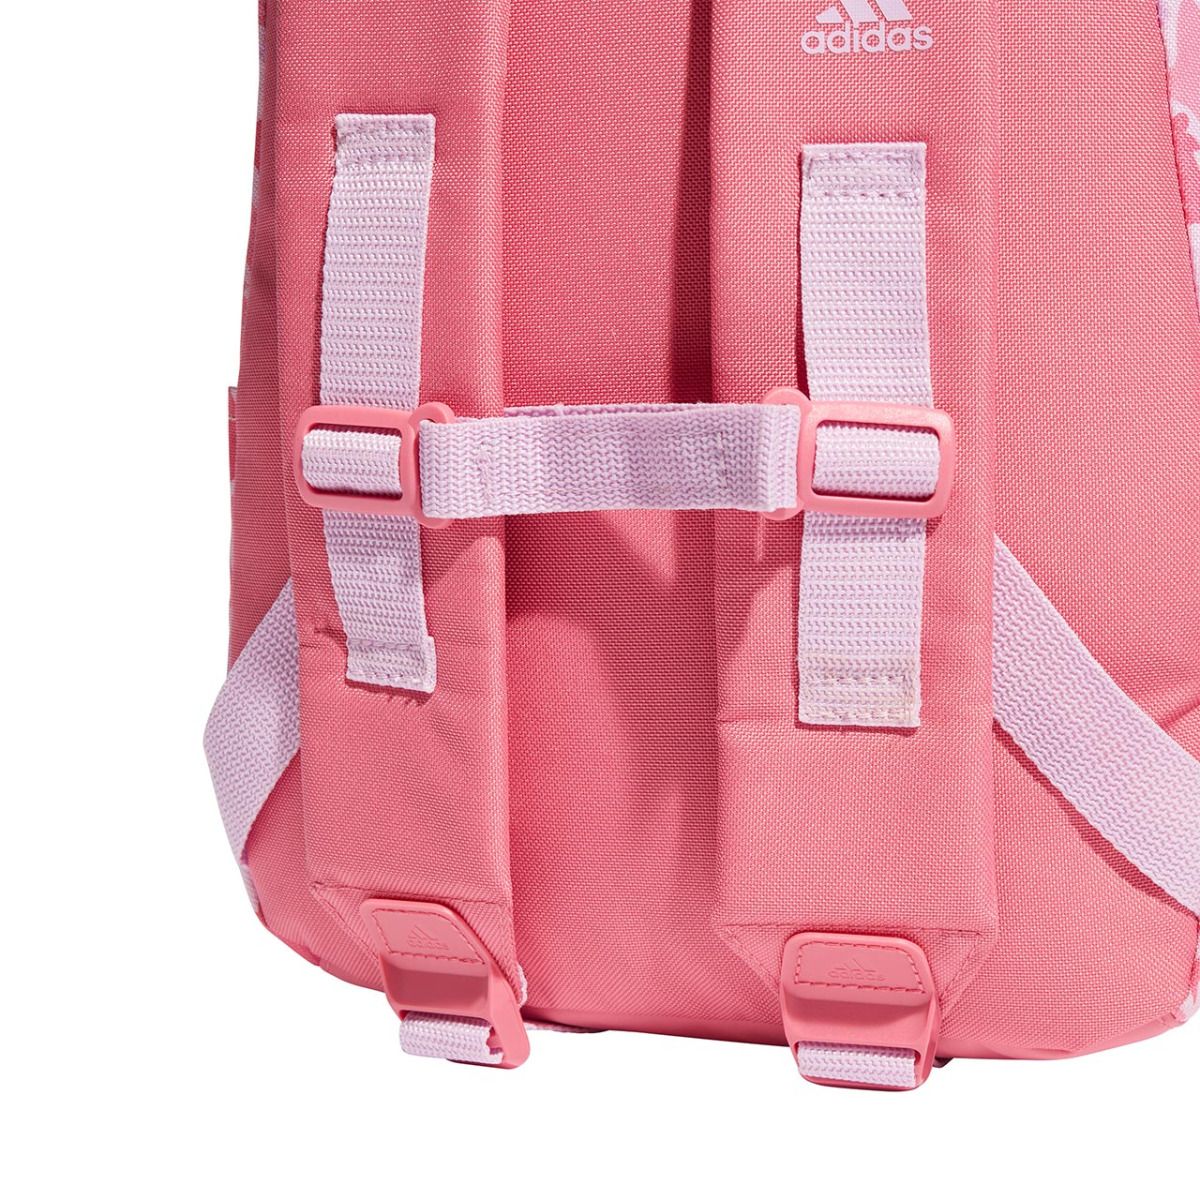 adidas Rucsac Printed Backpack IS0923